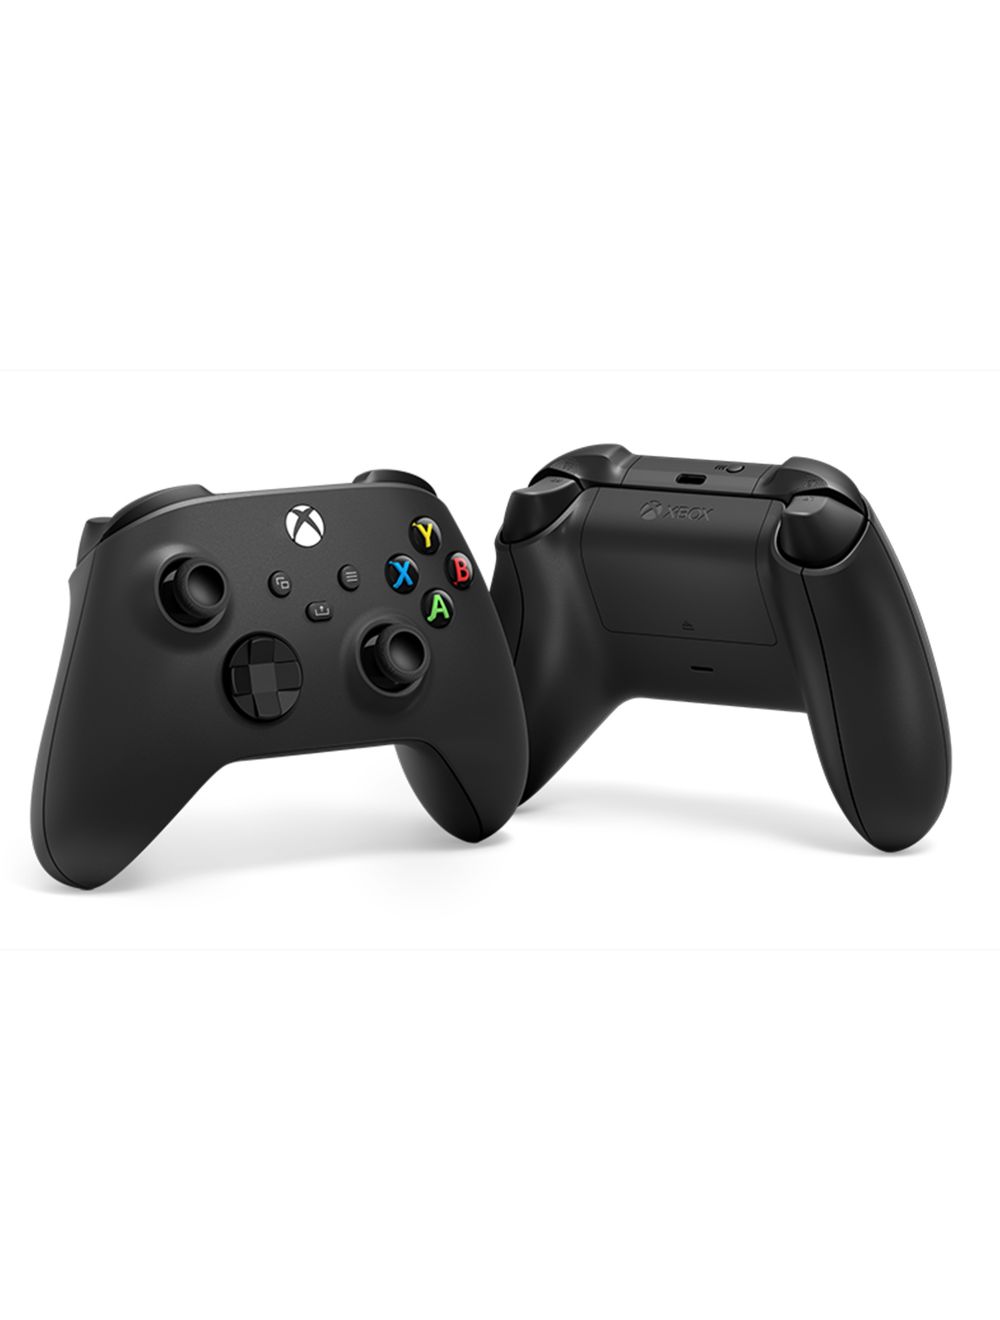 Control Xbox Carbon Black